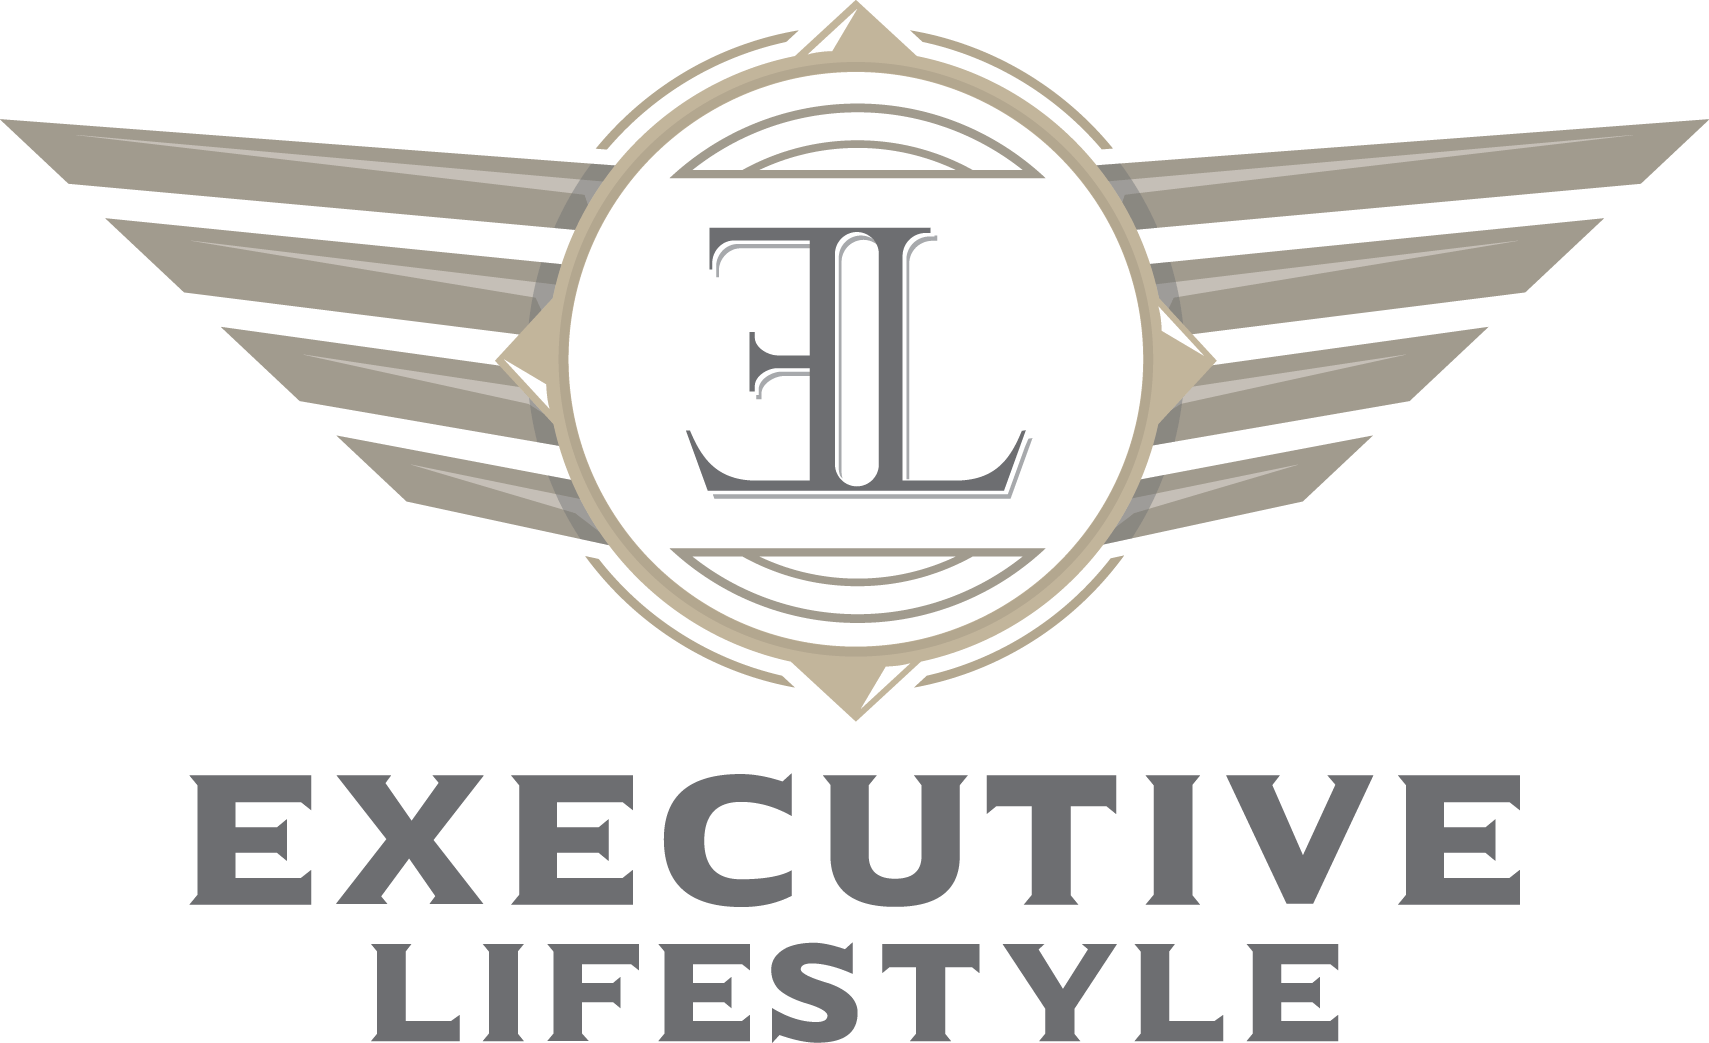 Executive Service Logo - Executive Lifestyle Air Charter Service. Luxury